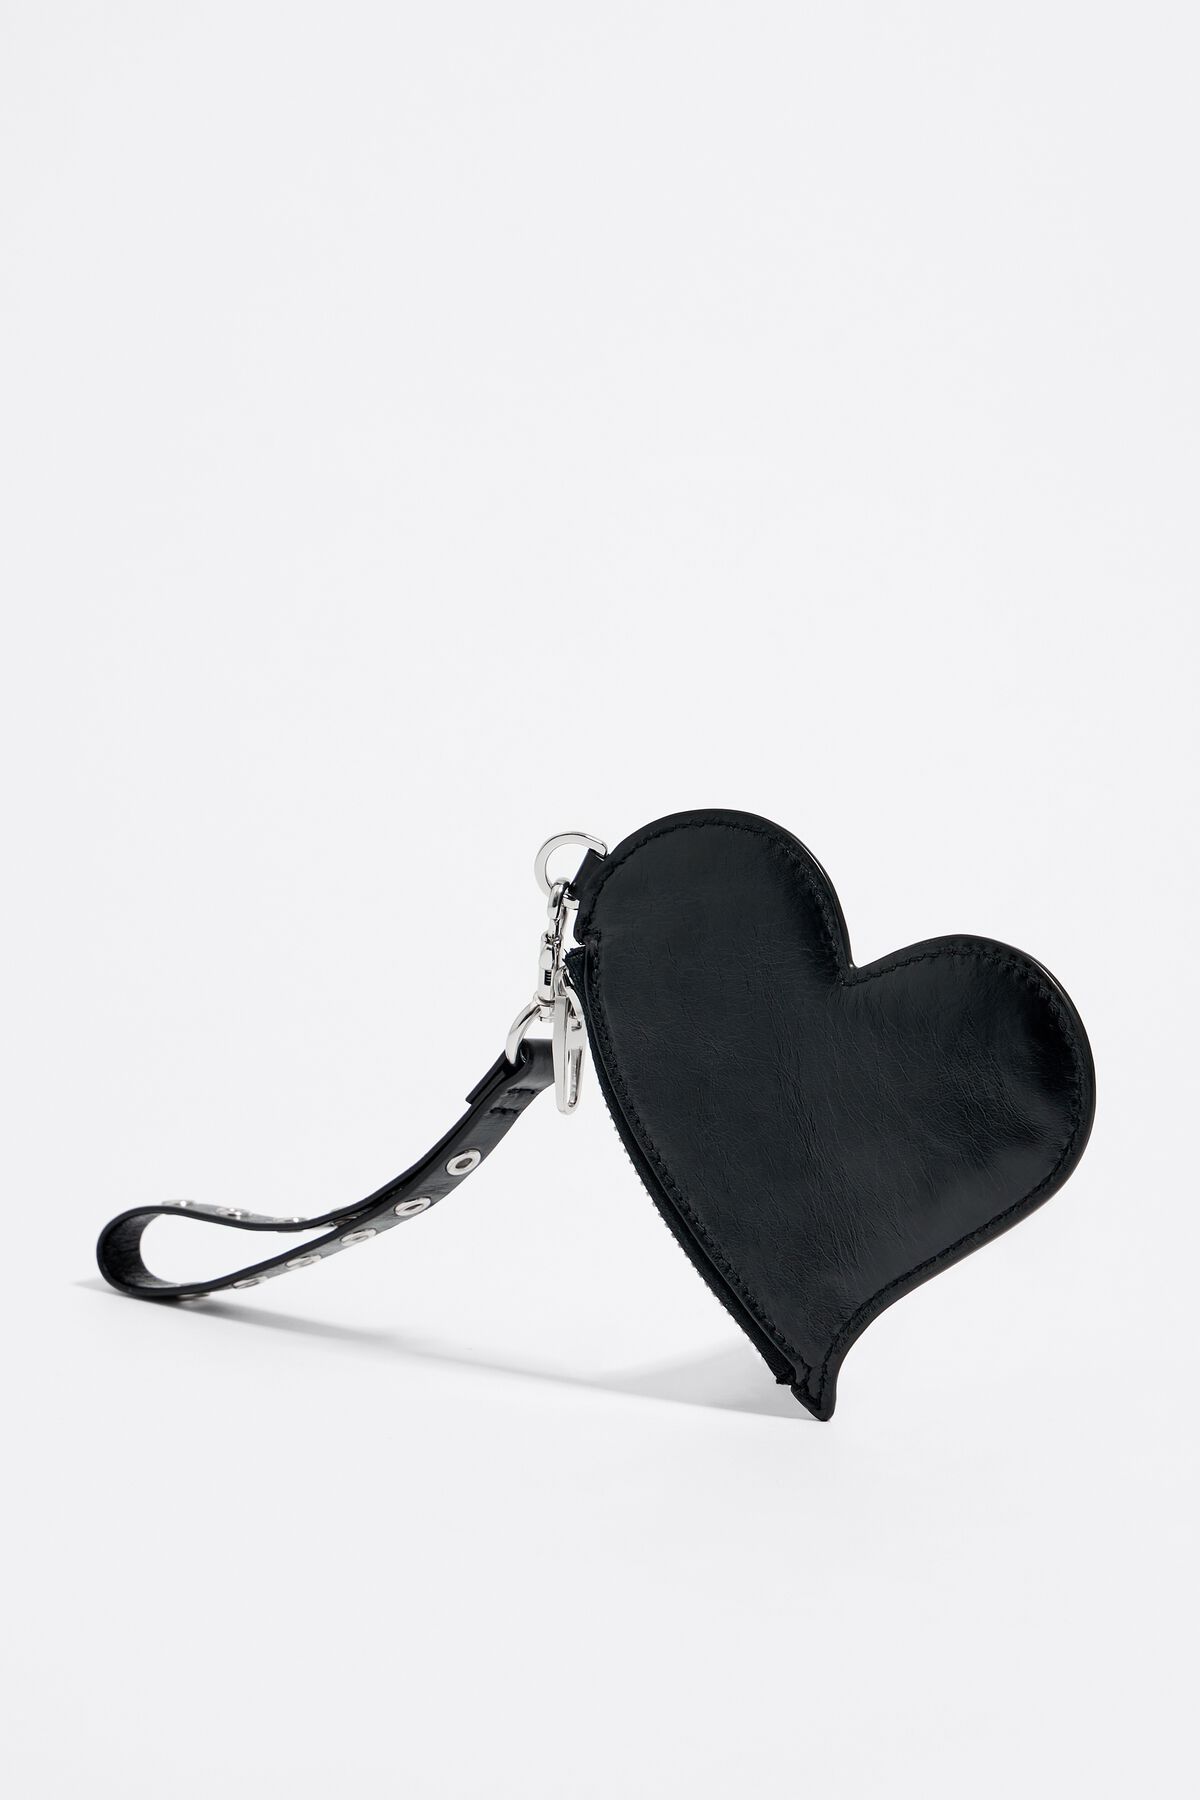 Las mejores ofertas en Tamaño Regular Negro Louis Vuitton abrigos